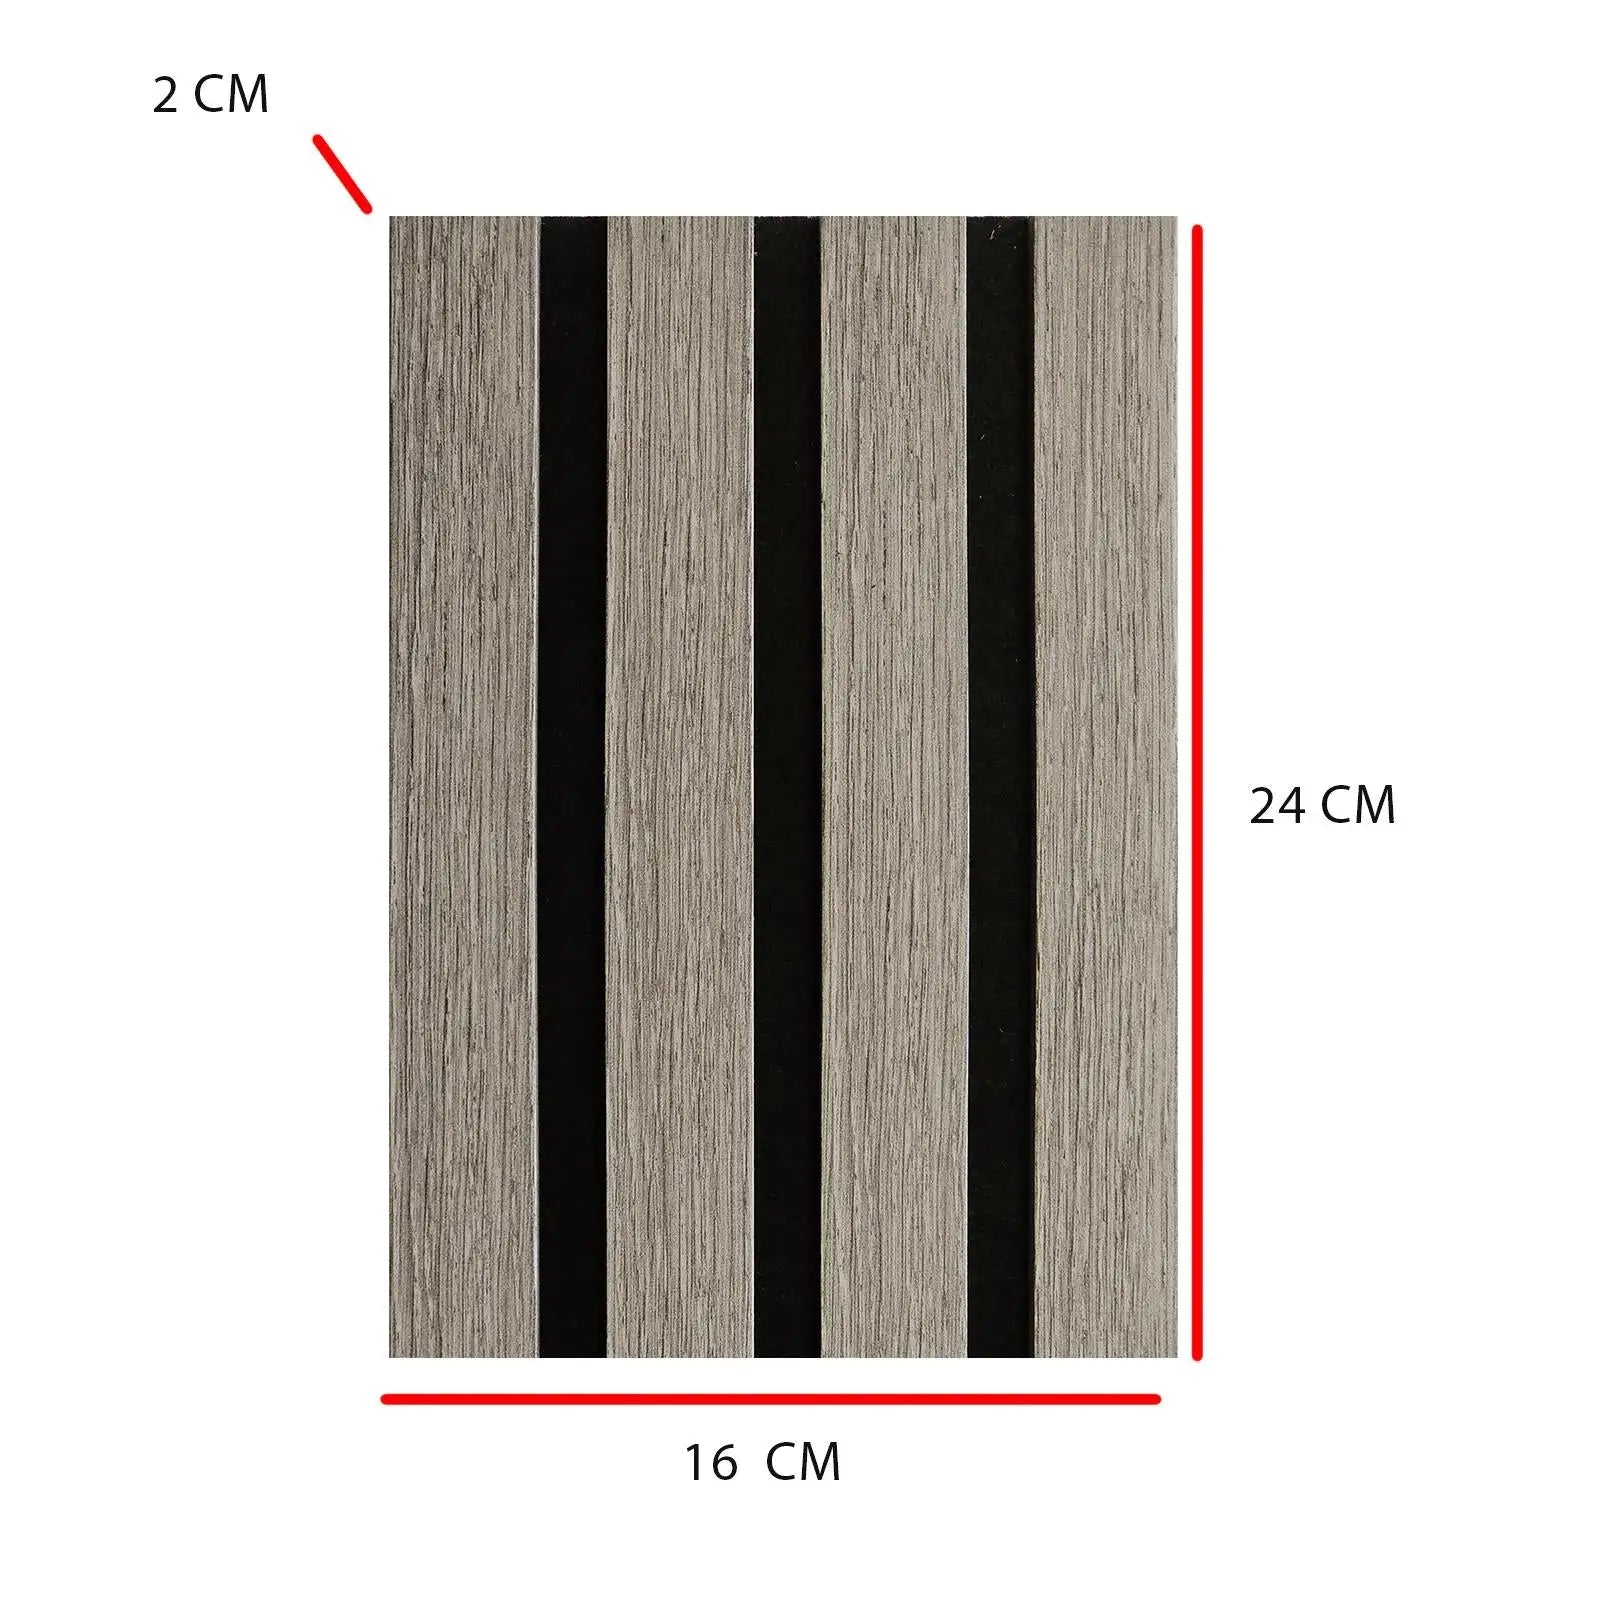 Acoustic Slat Wood Wall Panel - Dark Grey - SAMPLE